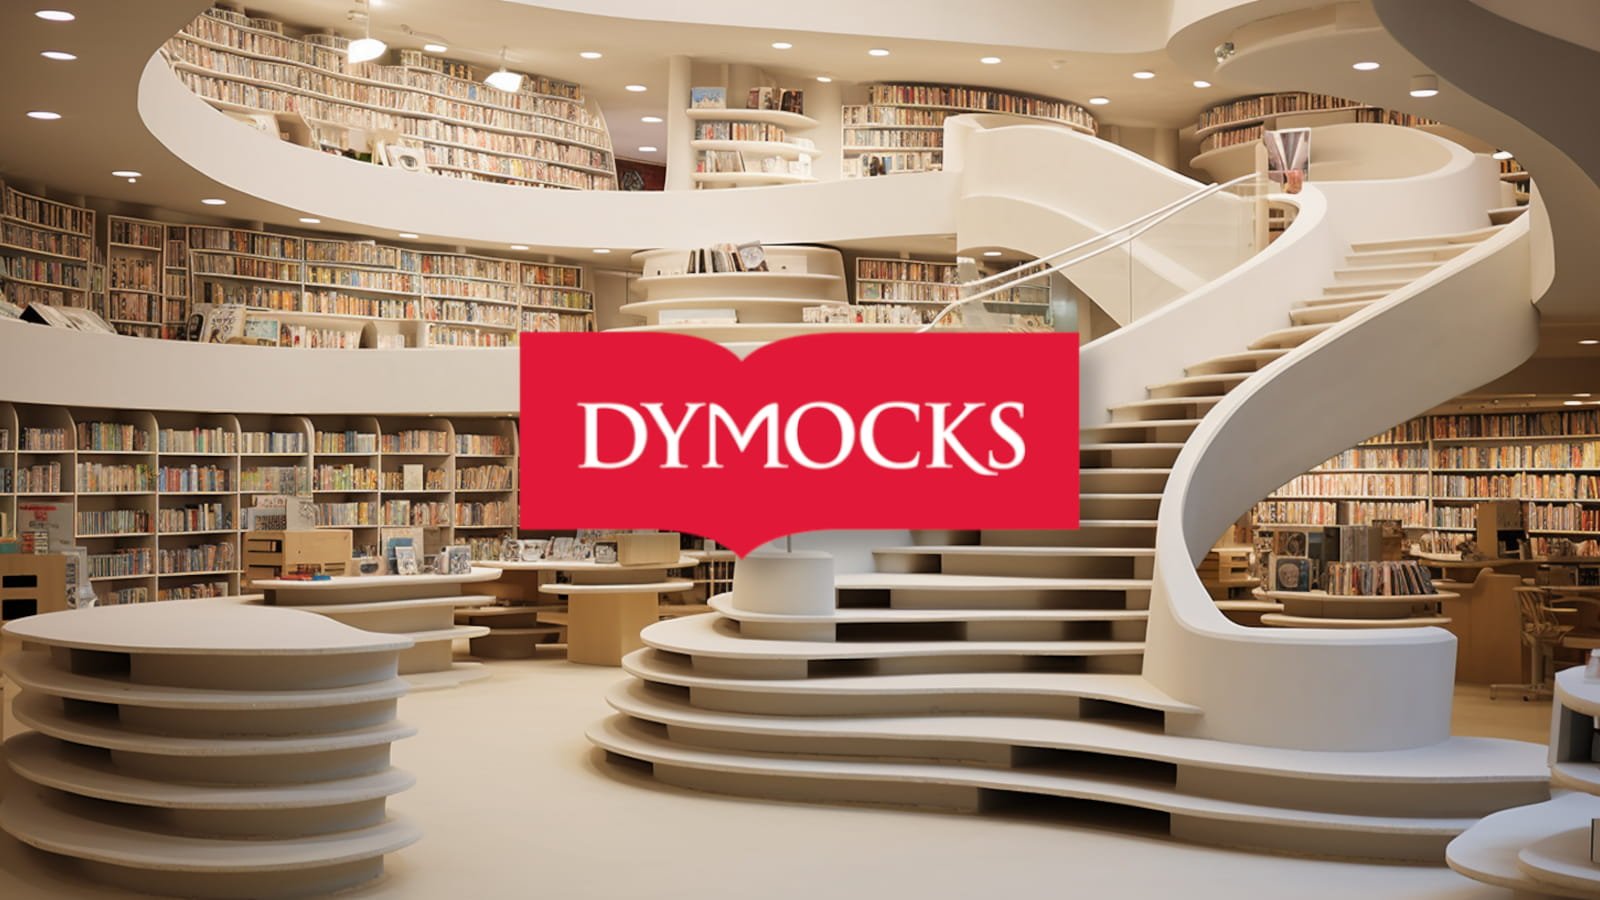 Dymocks Booksellers suffers data breach impacting 836k customers – Source: www.bleepingcomputer.com